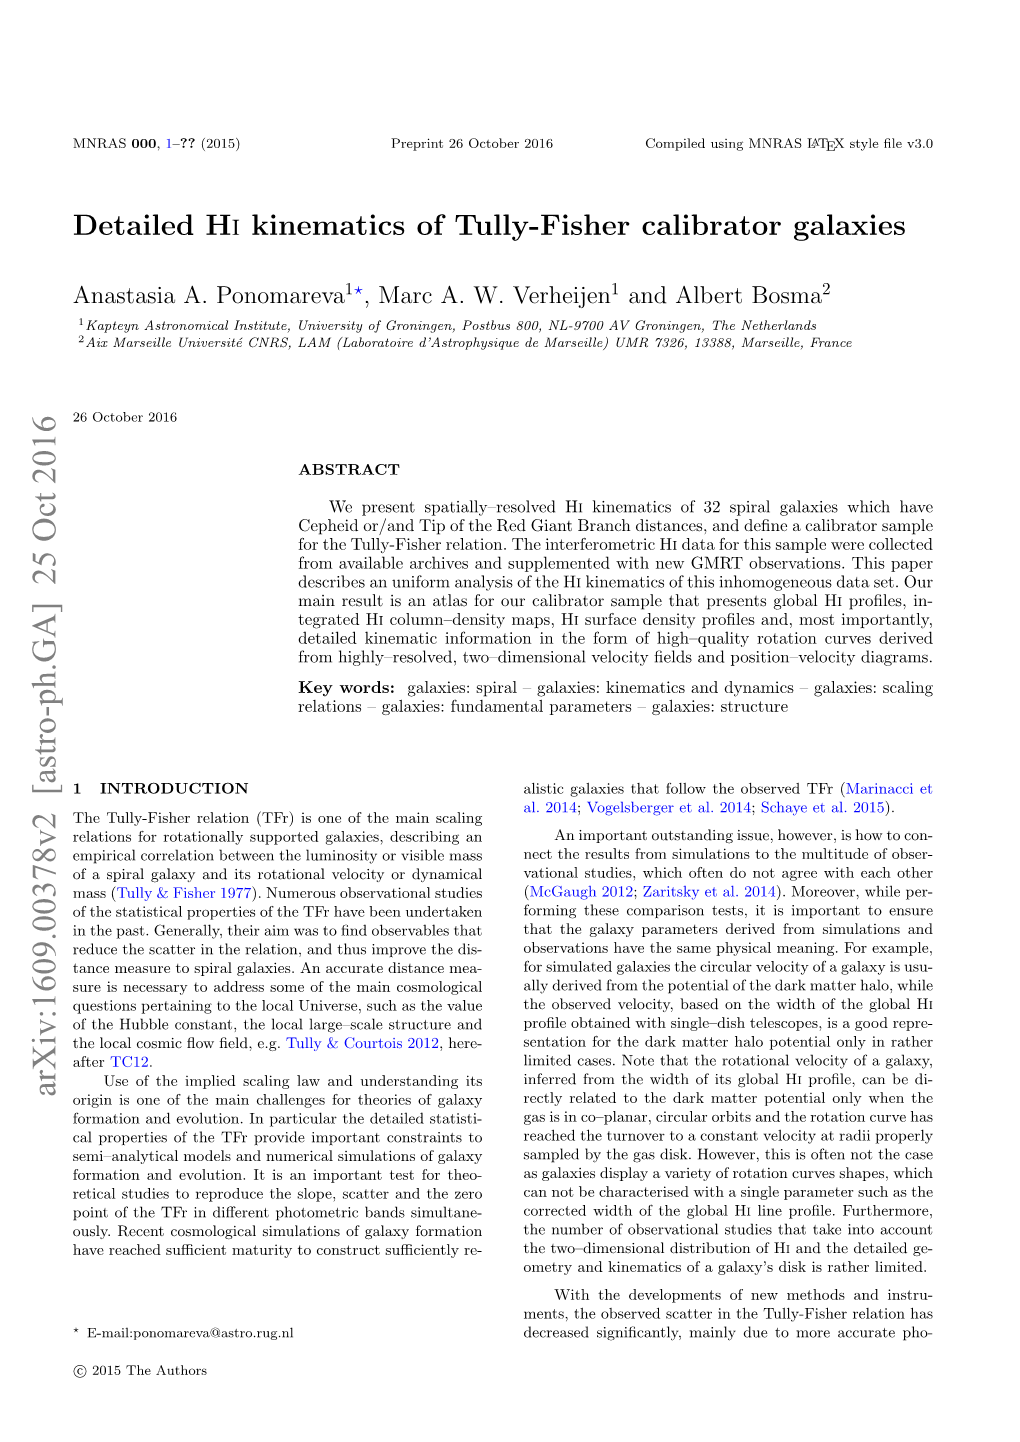 Detailed Hi Kinematics of Tully-Fisher Calibrator Galaxies